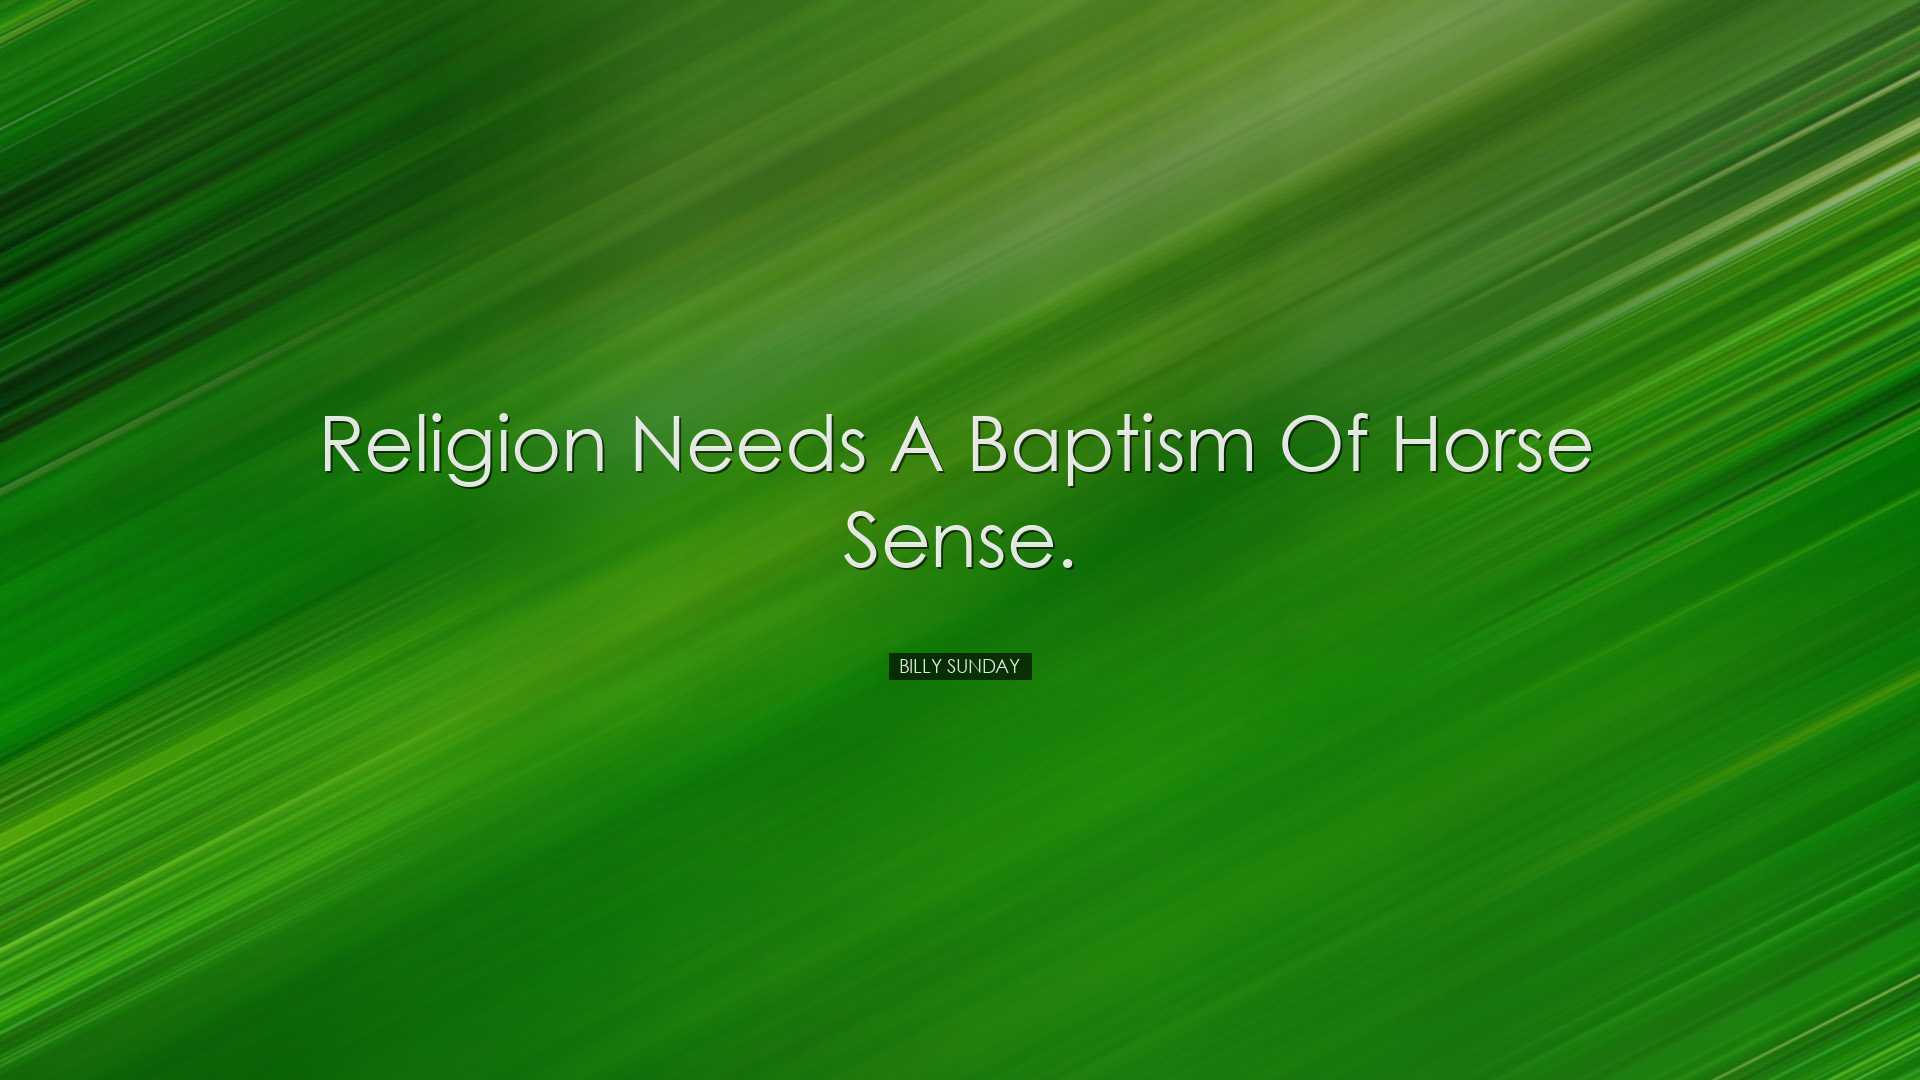 Religion needs a baptism of horse sense. - Billy Sunday